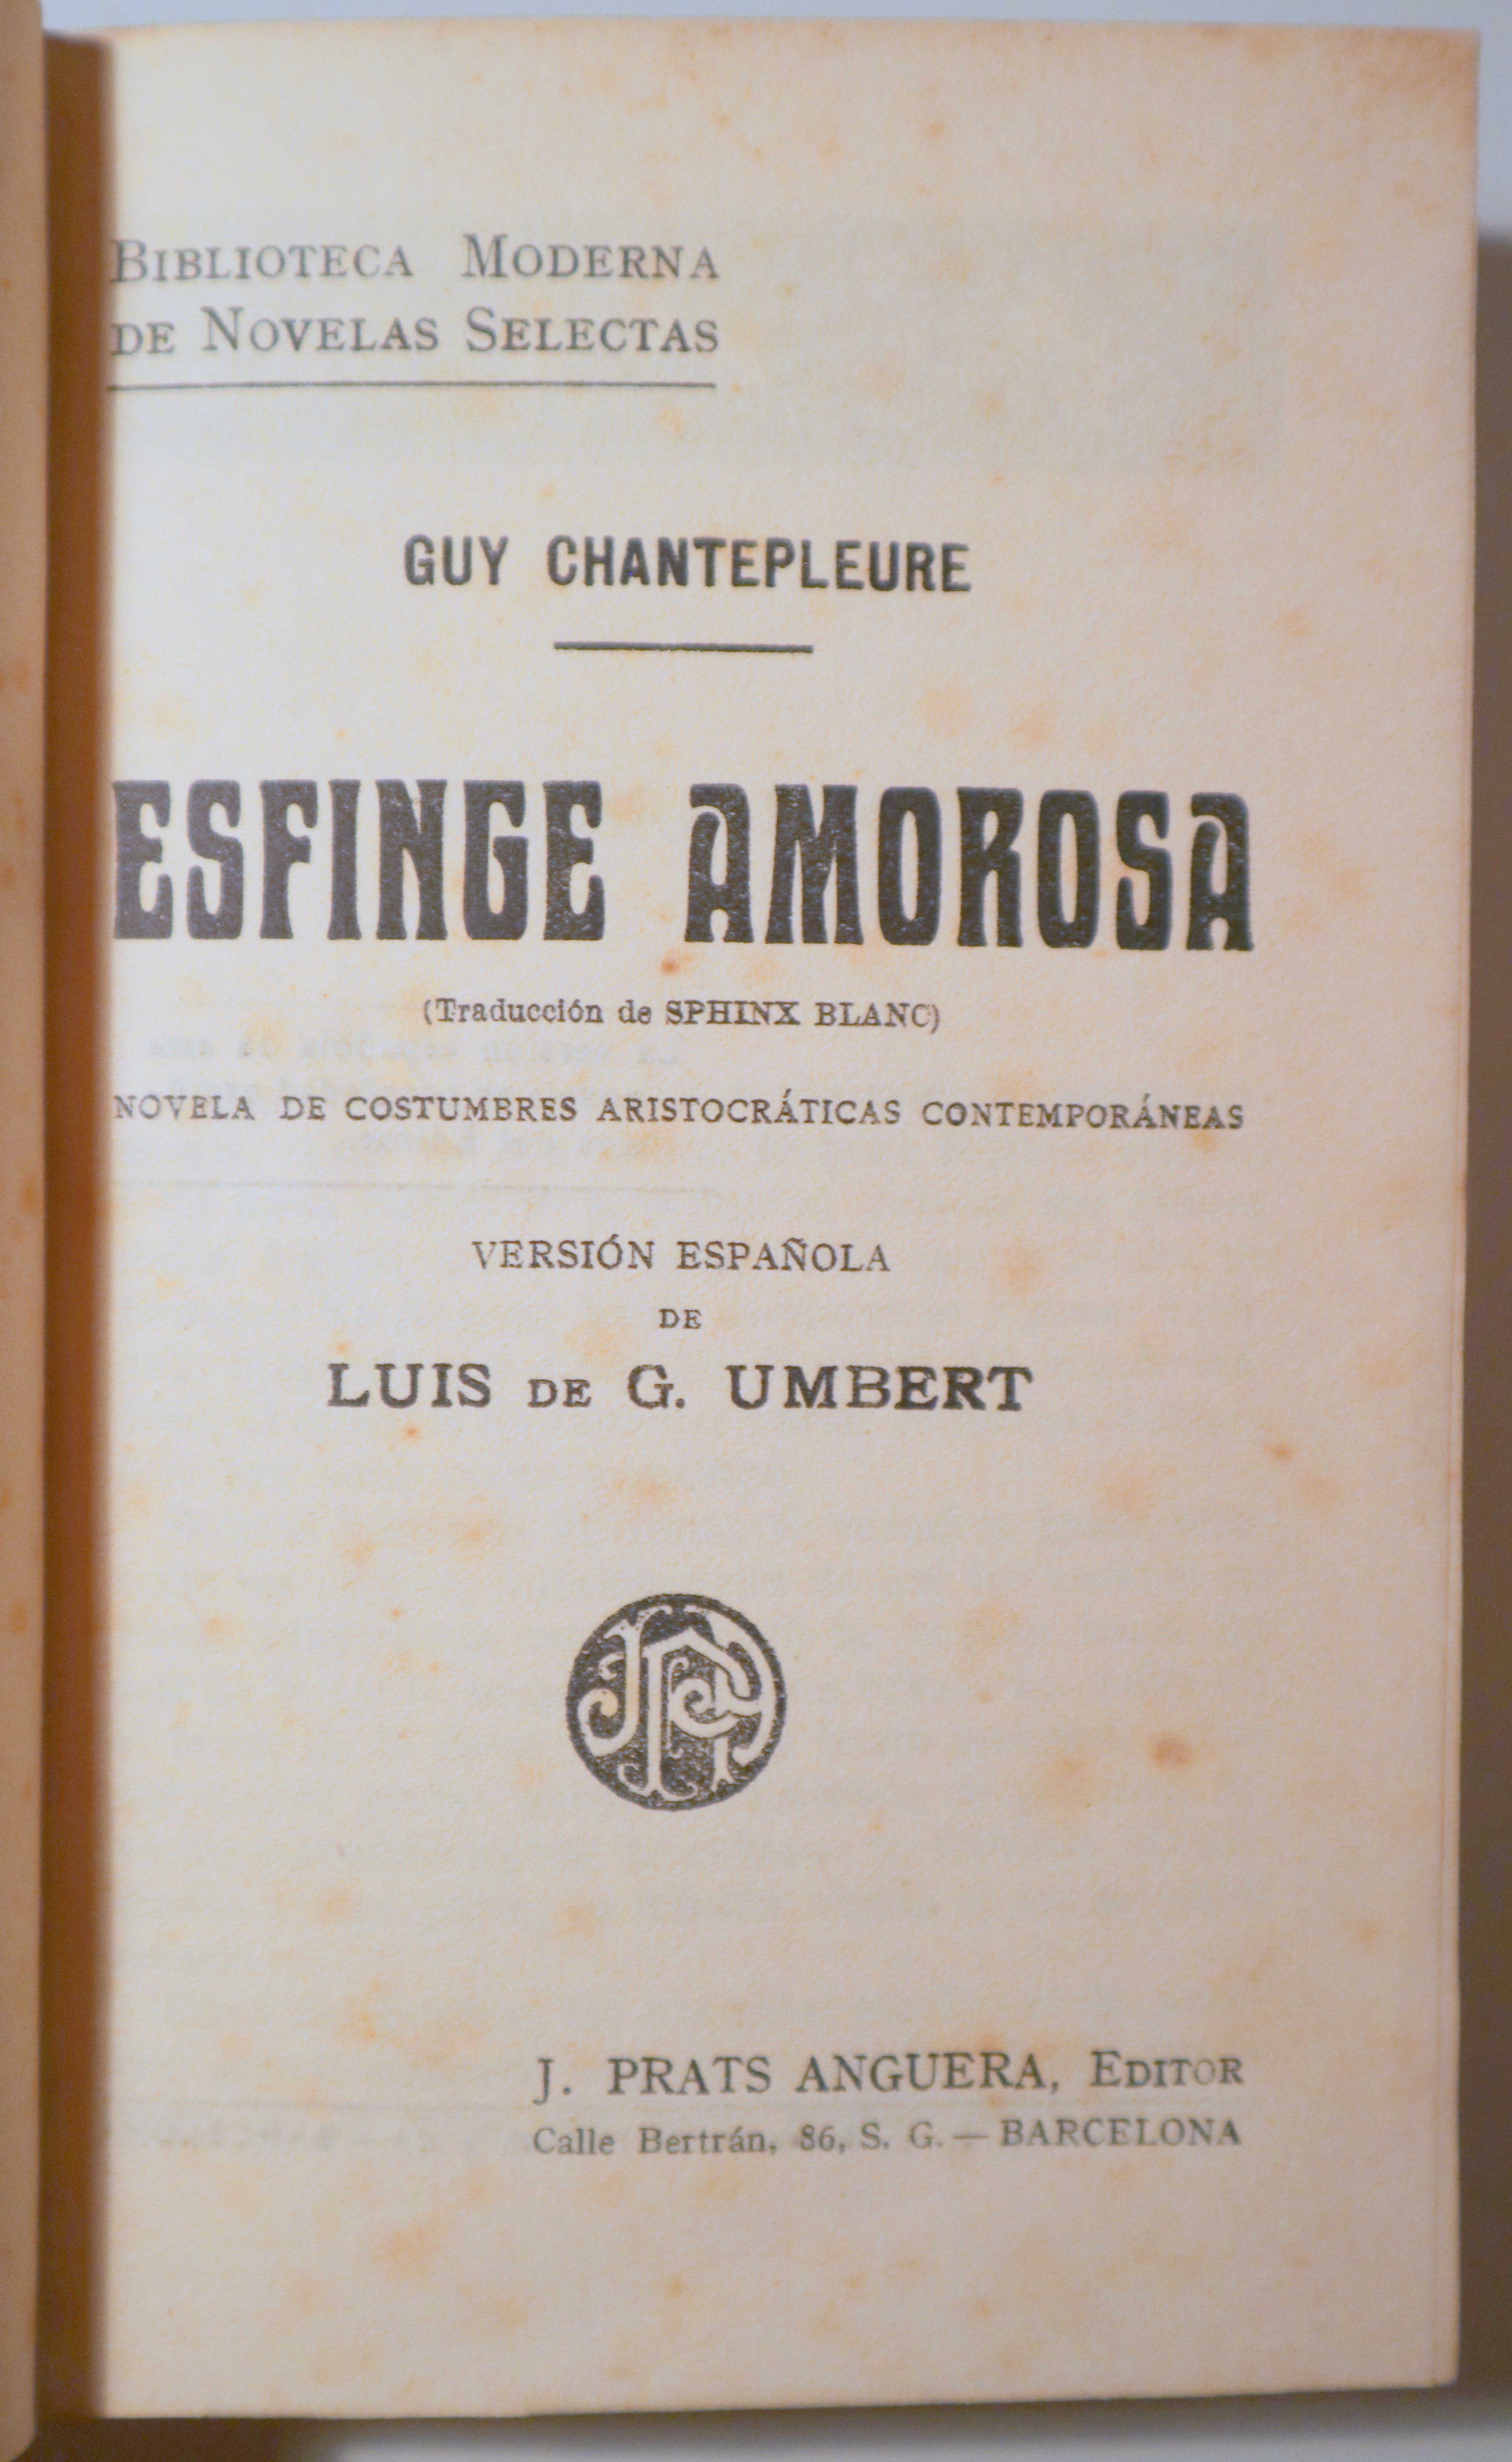 ESFINGE AMOROSA. Novela de costumbres aristocráticas contemporáneas - Barcelona s/f